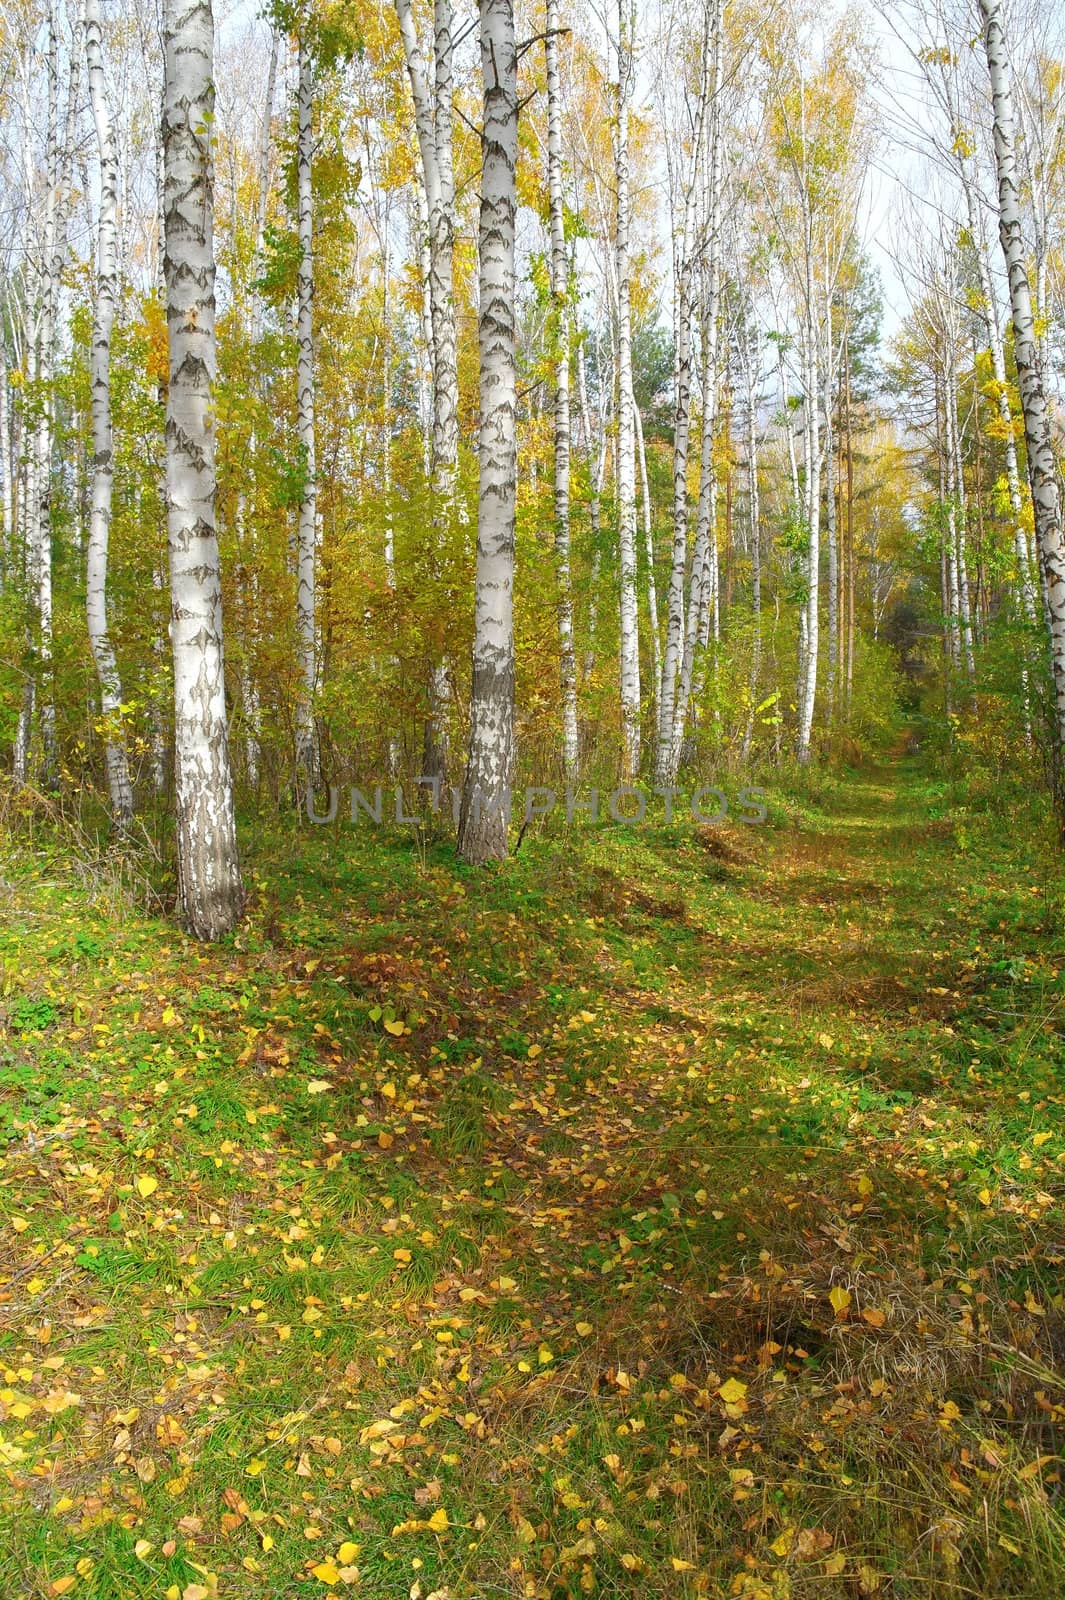 Footpath in autumn birch grove by sergpet